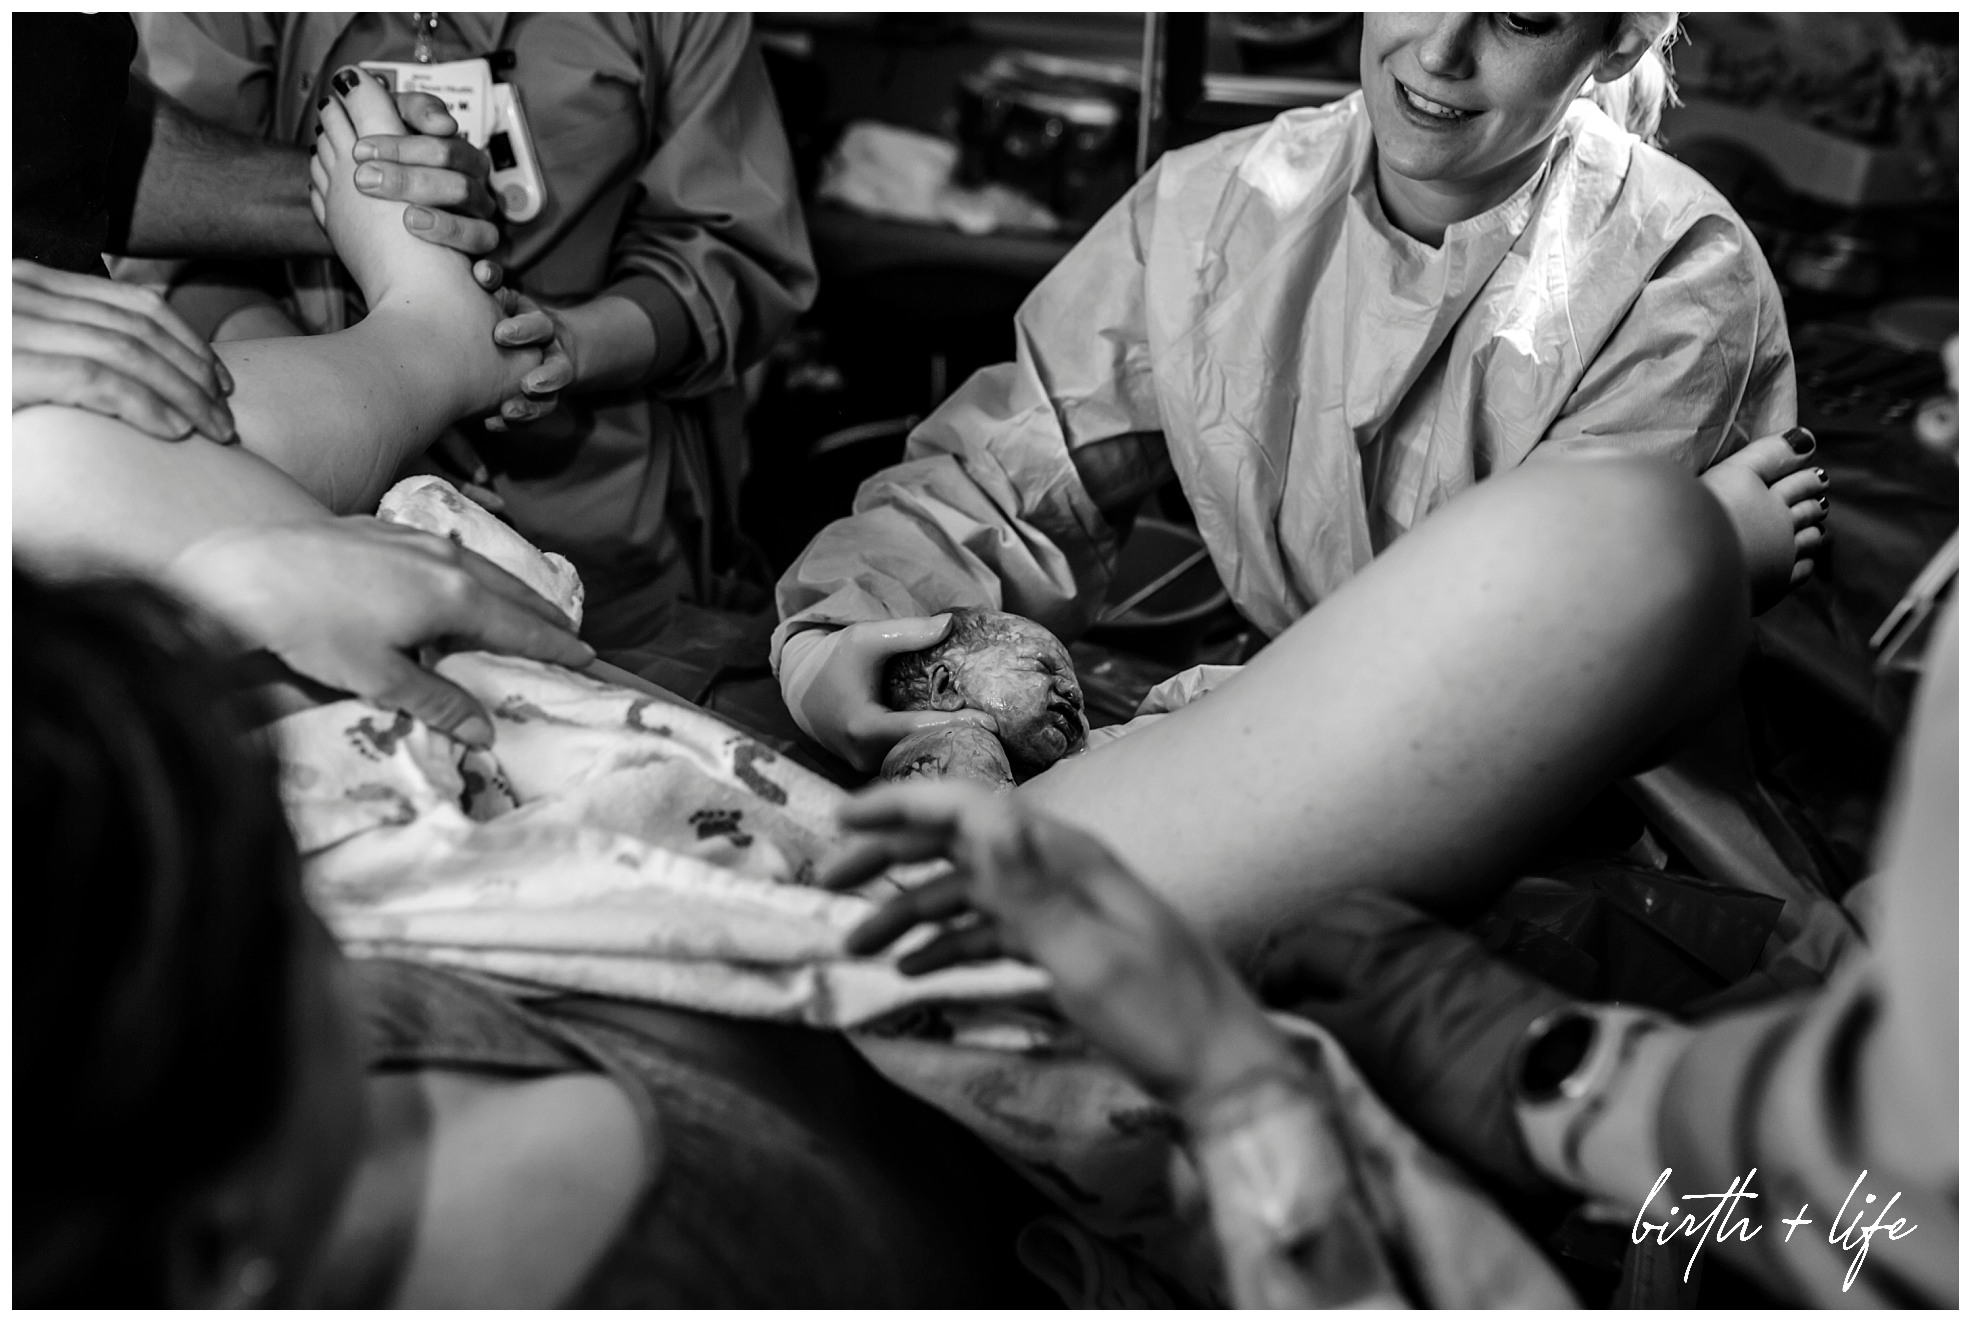 dfw-birth-and-life-photography-family-photojournalism-documentary-birth-storyacclaim-midwives-clark027.jpg